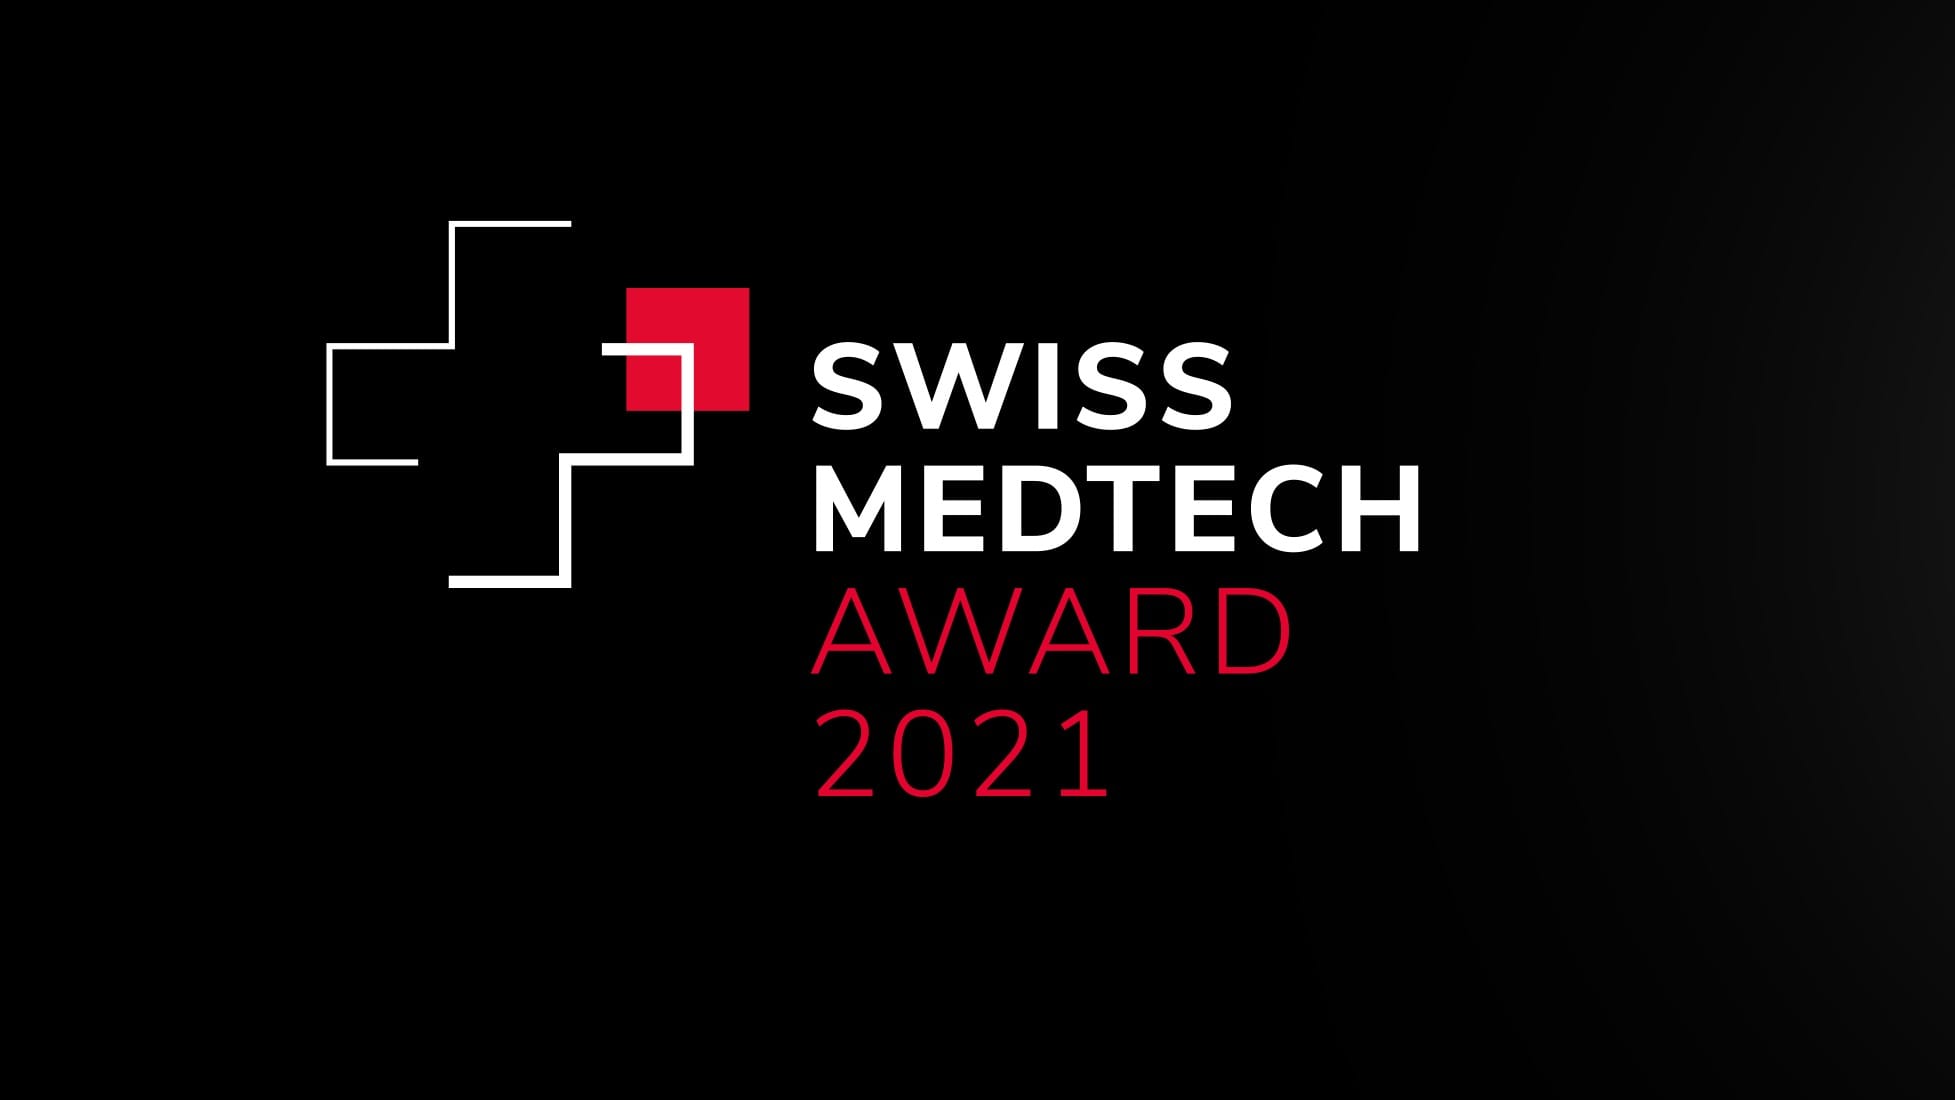 Swiss Medtech Award 2021: Letzte Chance sich zu bewerben